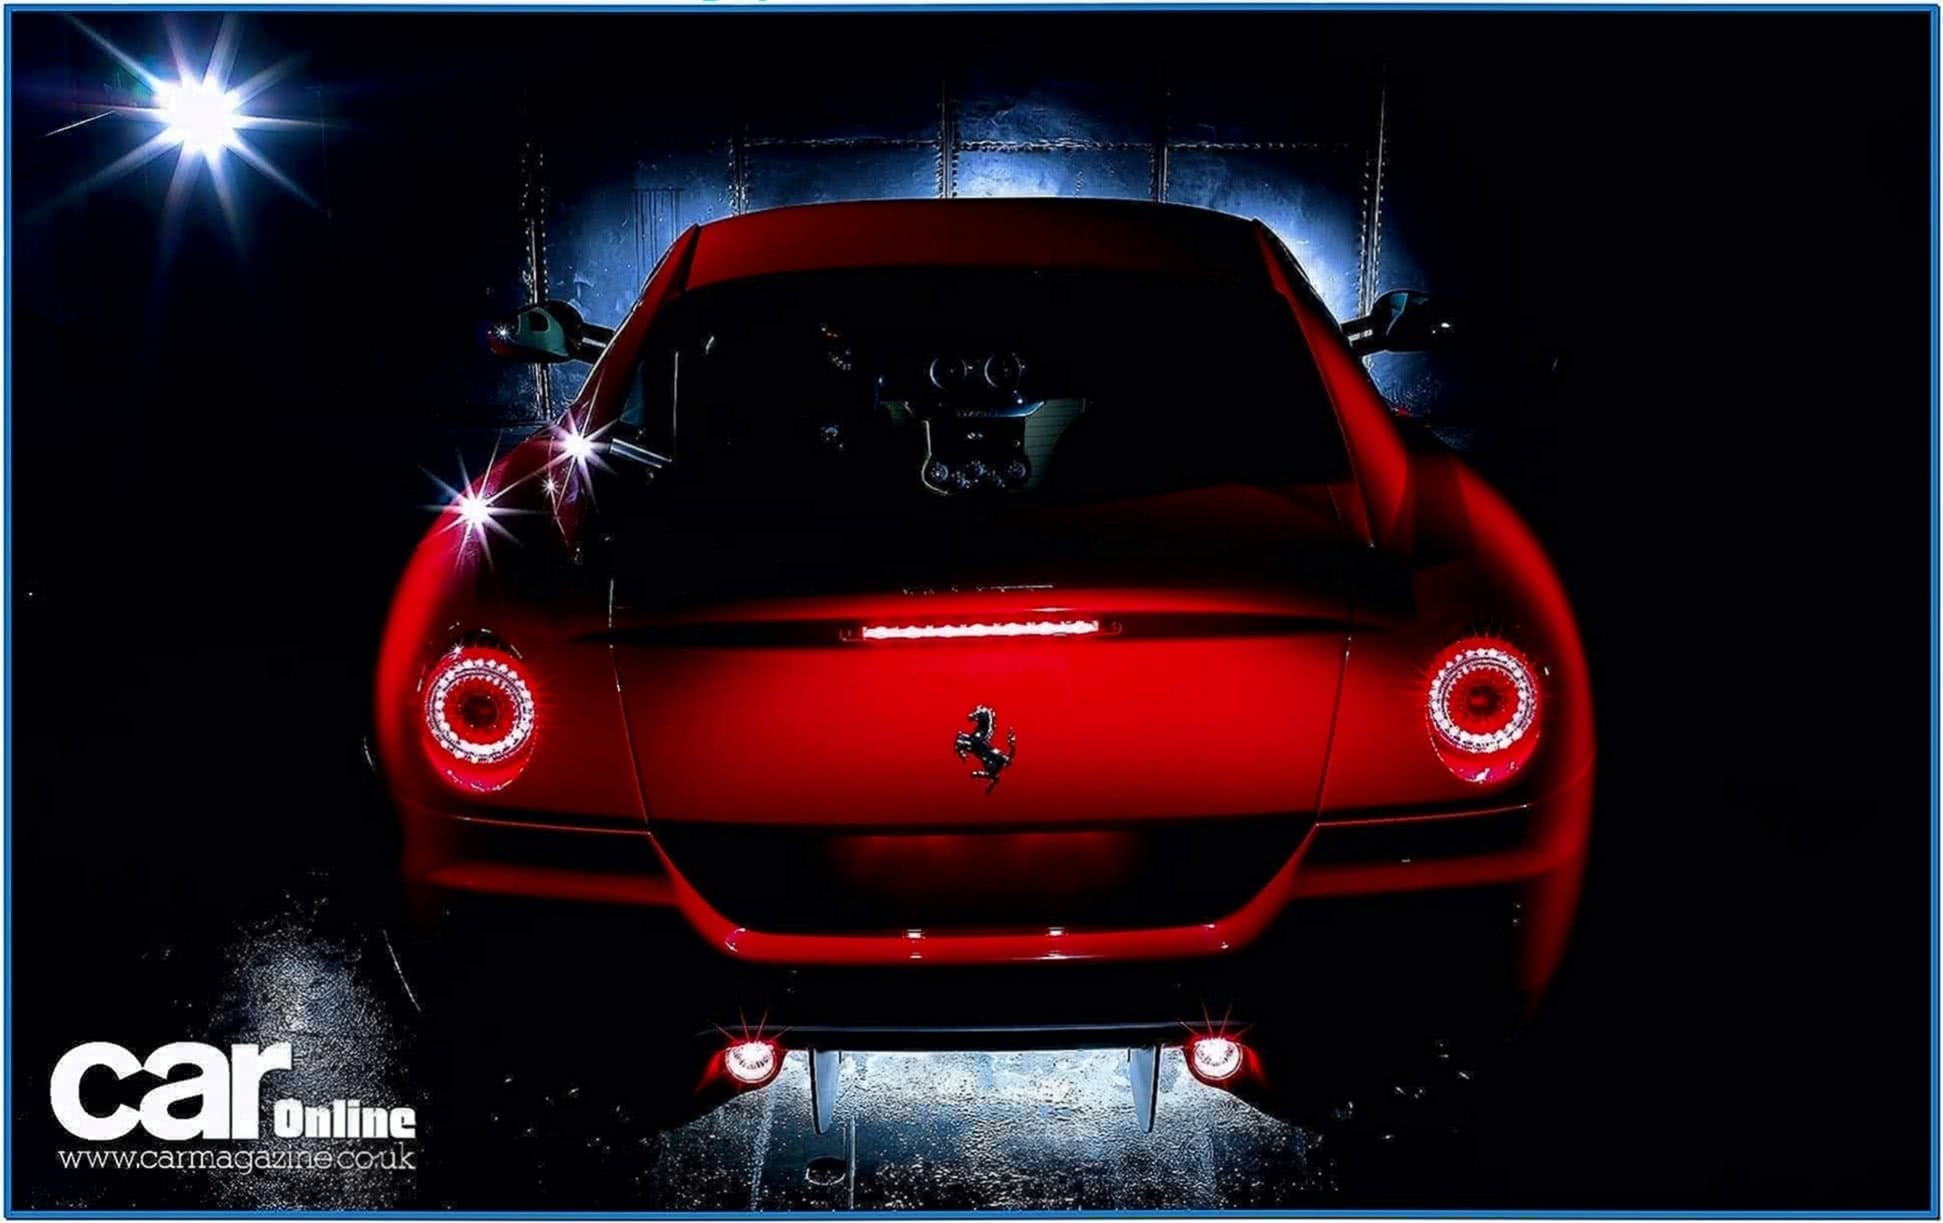 Ferrari Screensaver Desktop